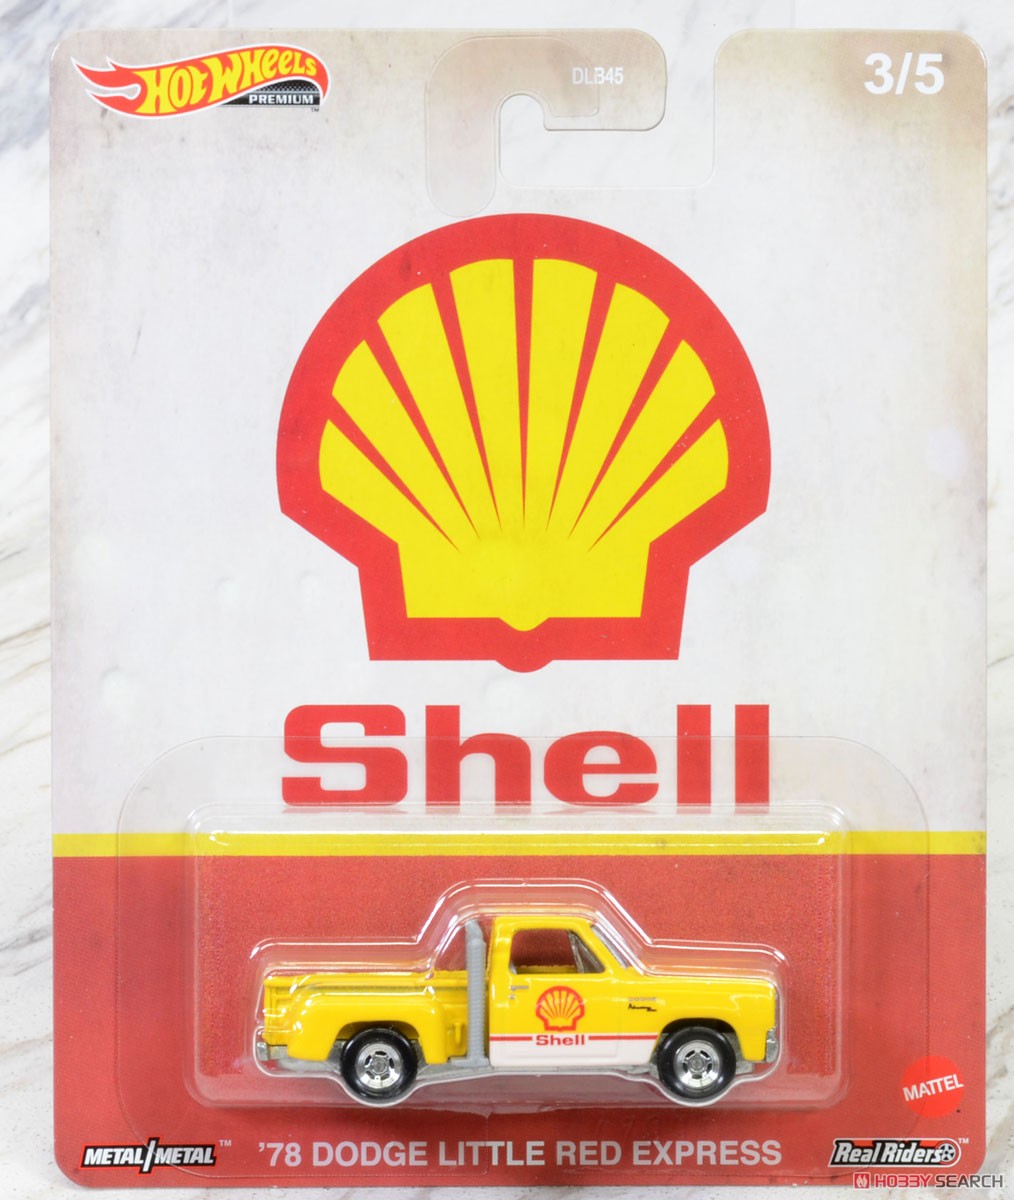 Hot Wheels Pop culture Assortment Vintage Oil (Set of 12) (Toy) Package3